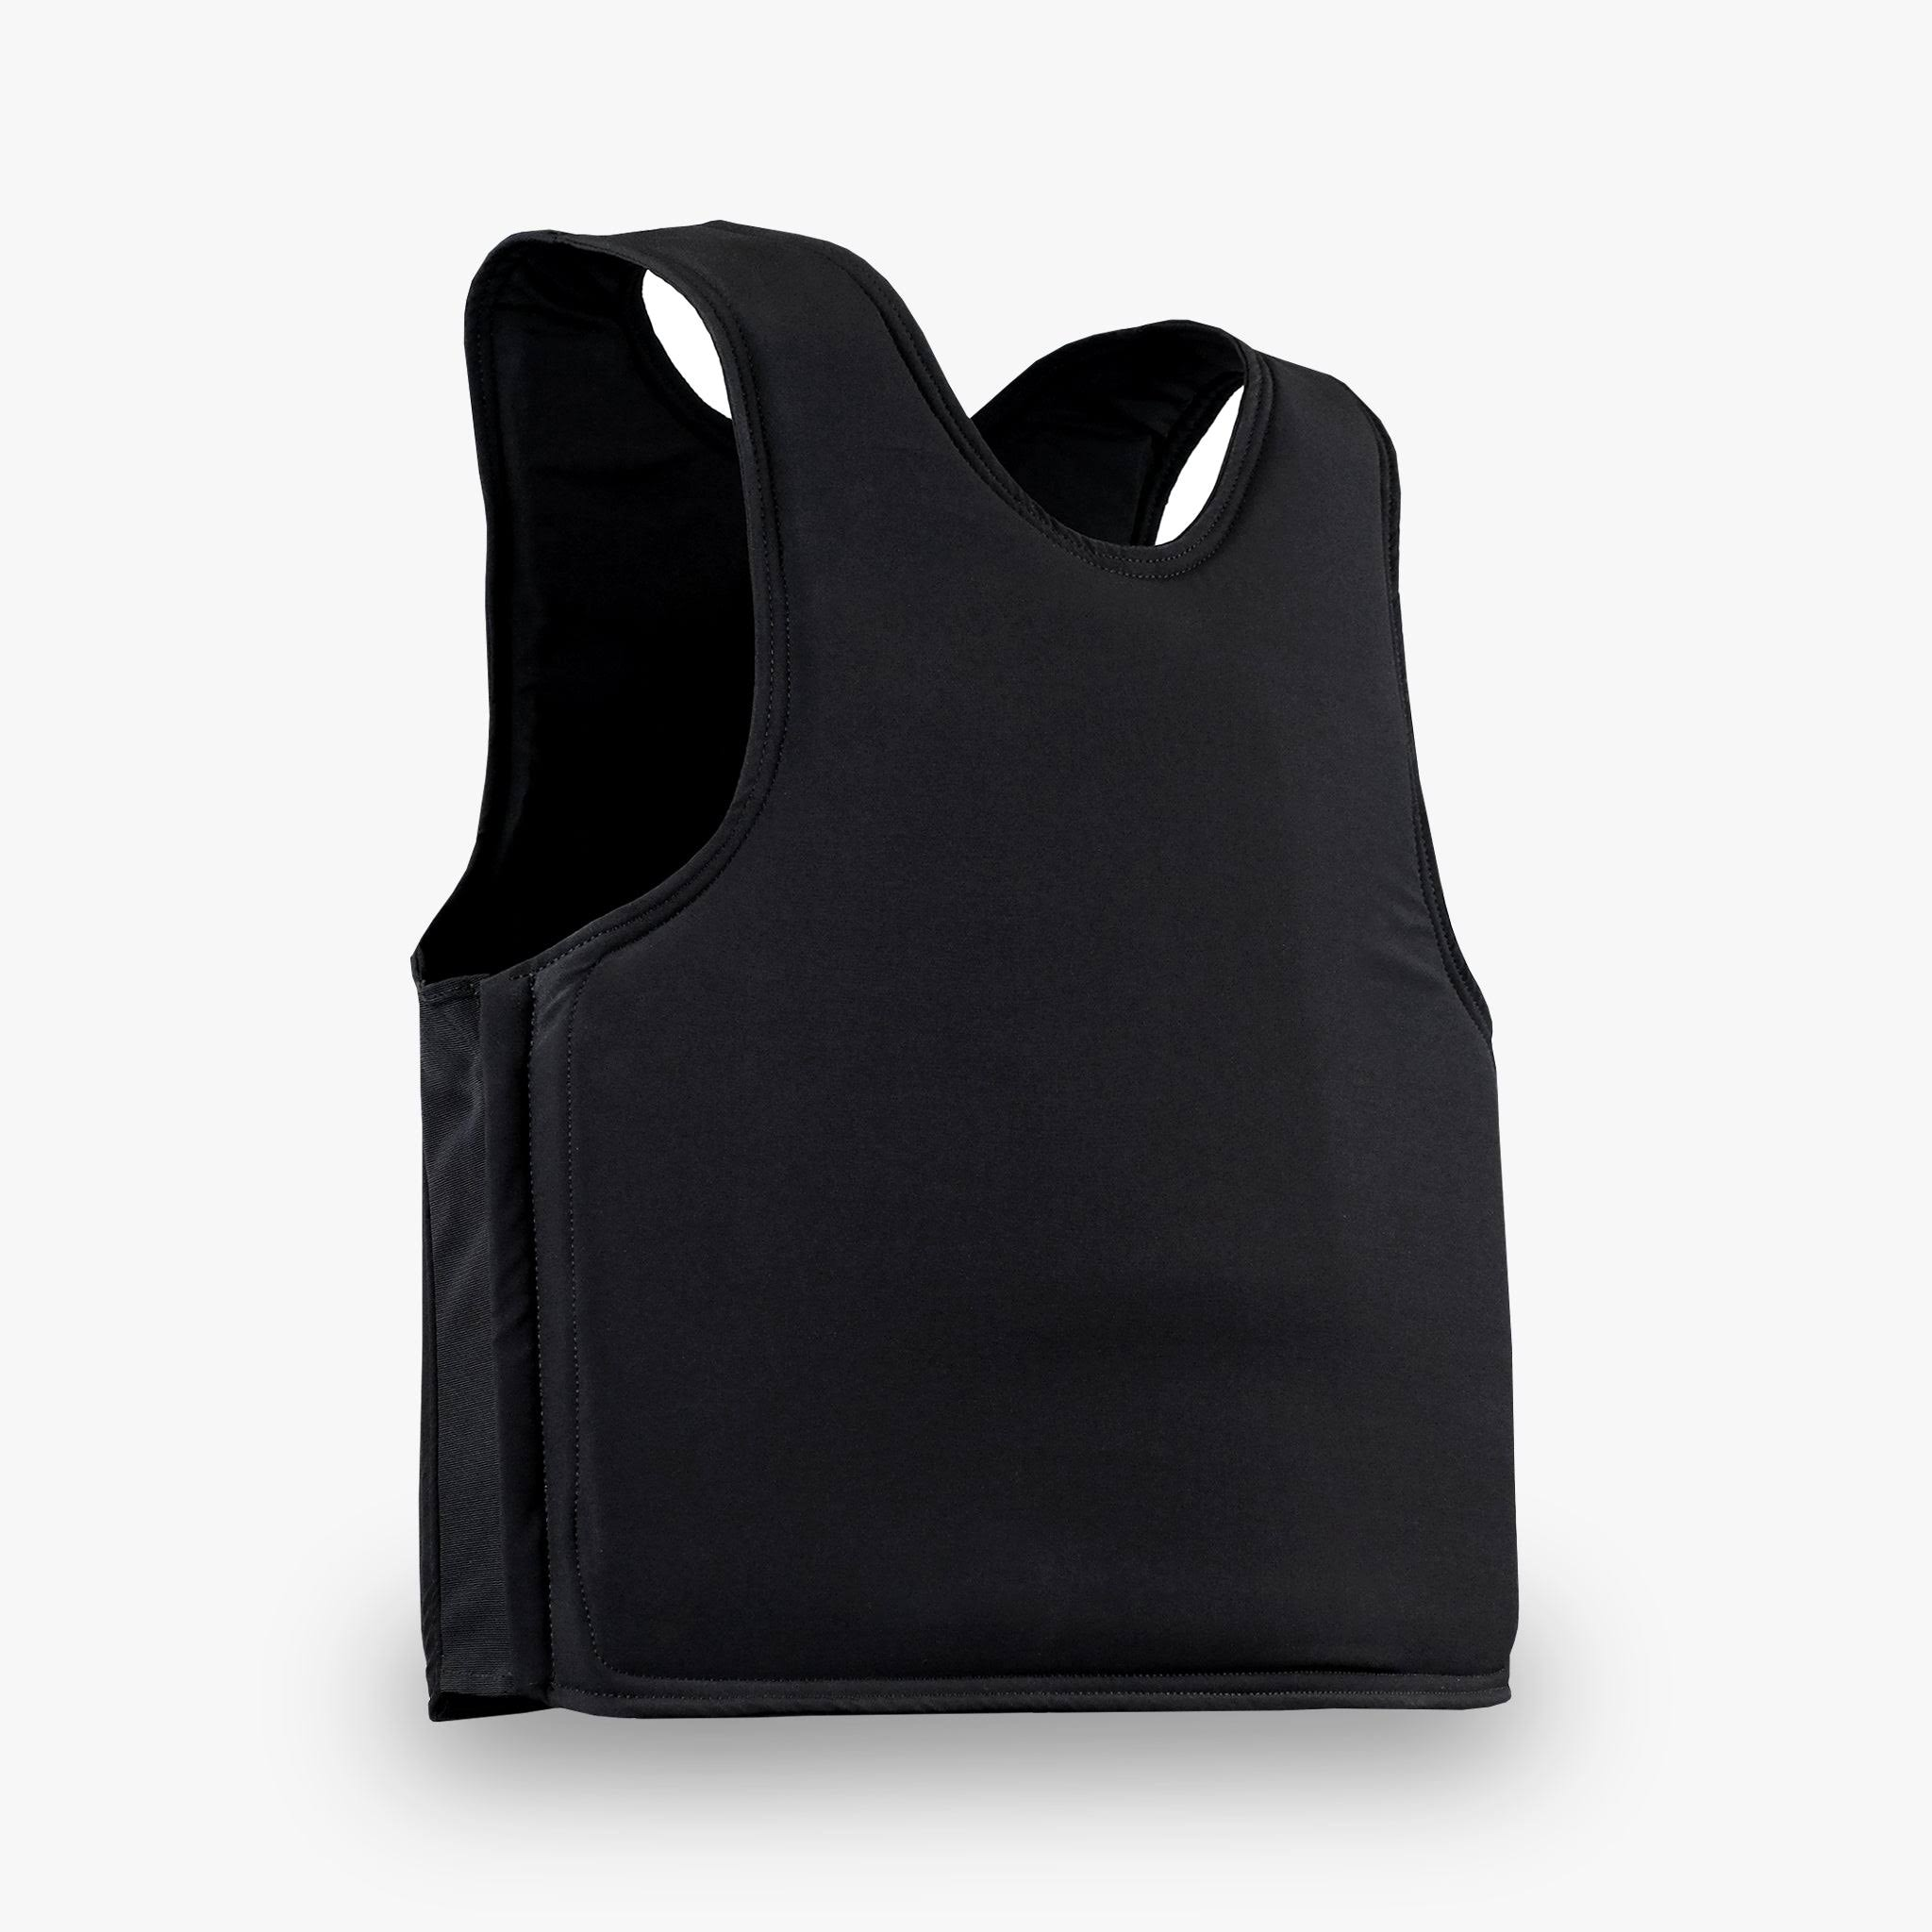 Premier Body Armor Discreet Executive Vest  C Level IIIA Black Small